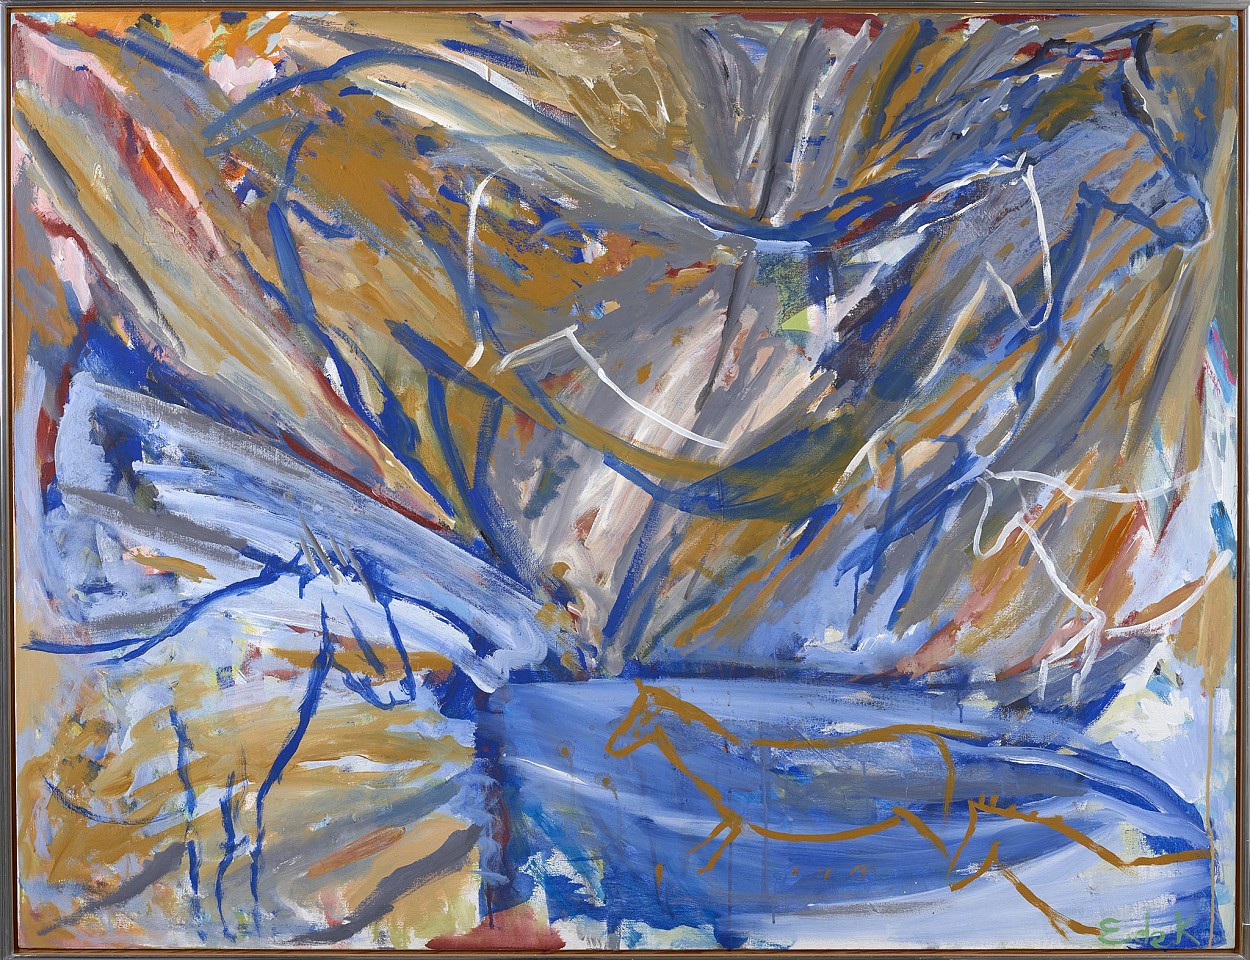 Elaine de Kooning, Six Horses: Blue Wall | SOLD, 1987
Acrylic on canvas, 46 x 60 in. (116.8 x 152.4 cm)
EDEK-00013